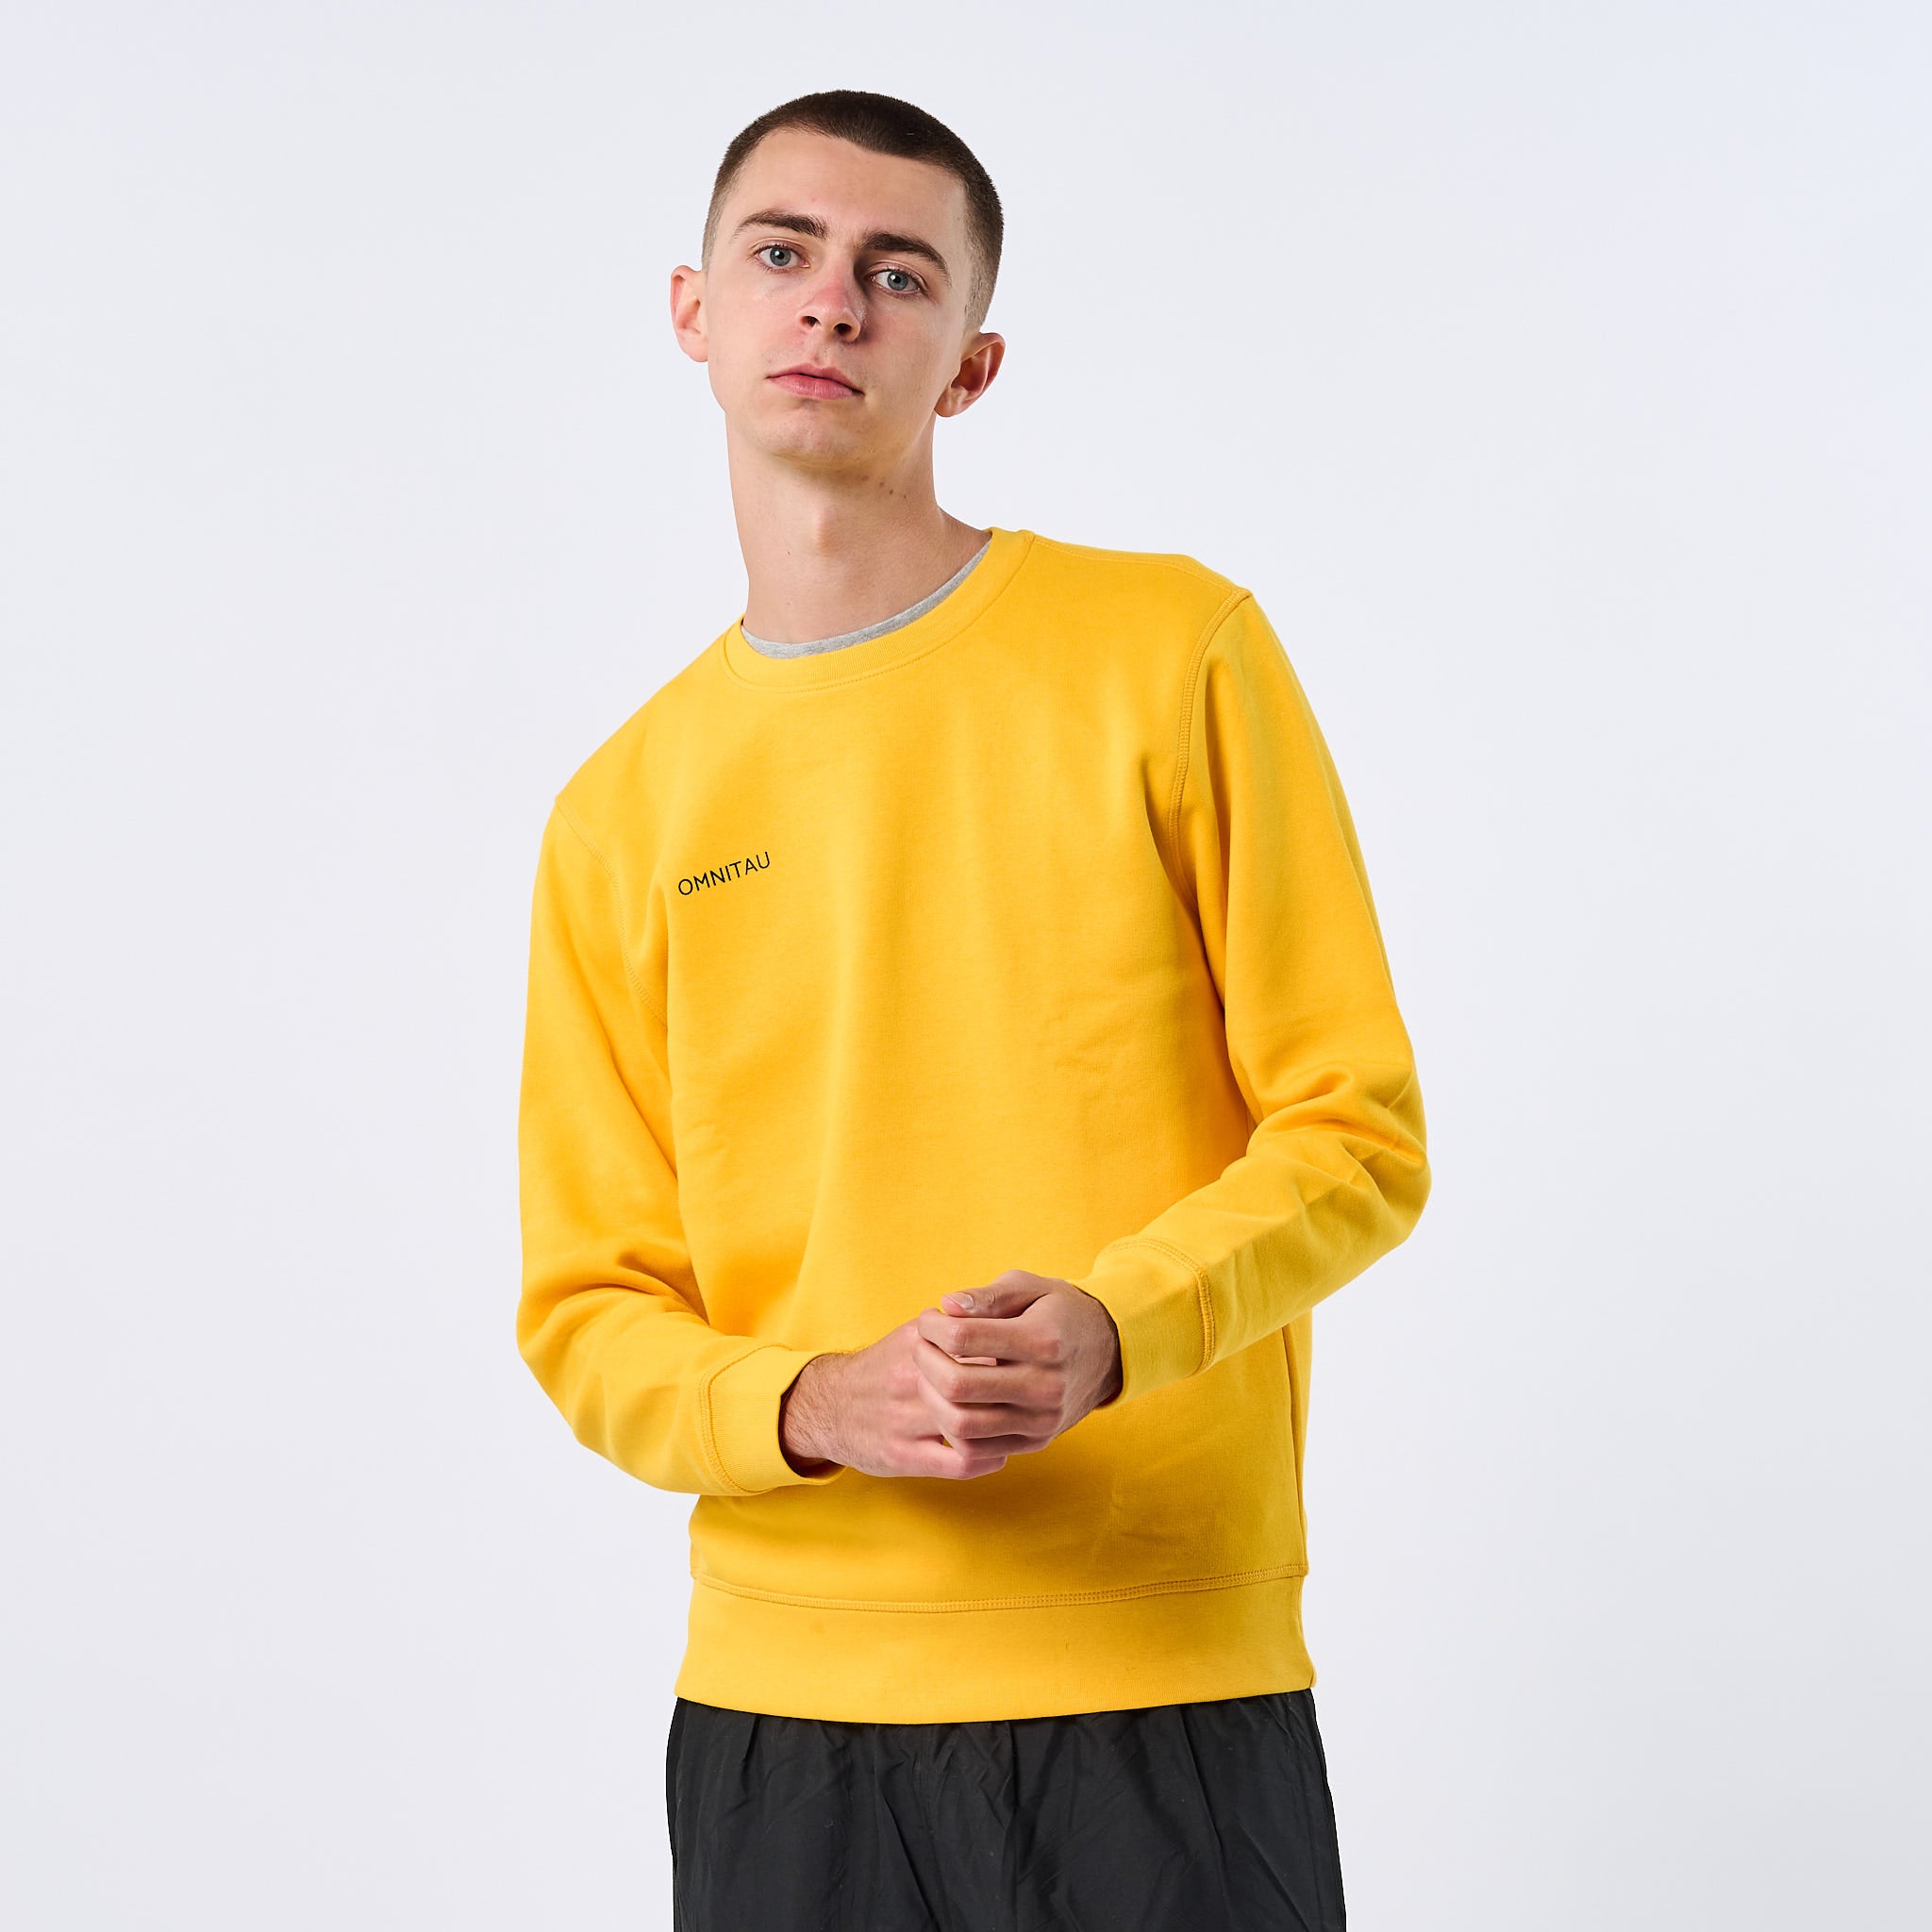 Omnitau Men's Team Sports Organic Cotton Sweatshirt - Yellow